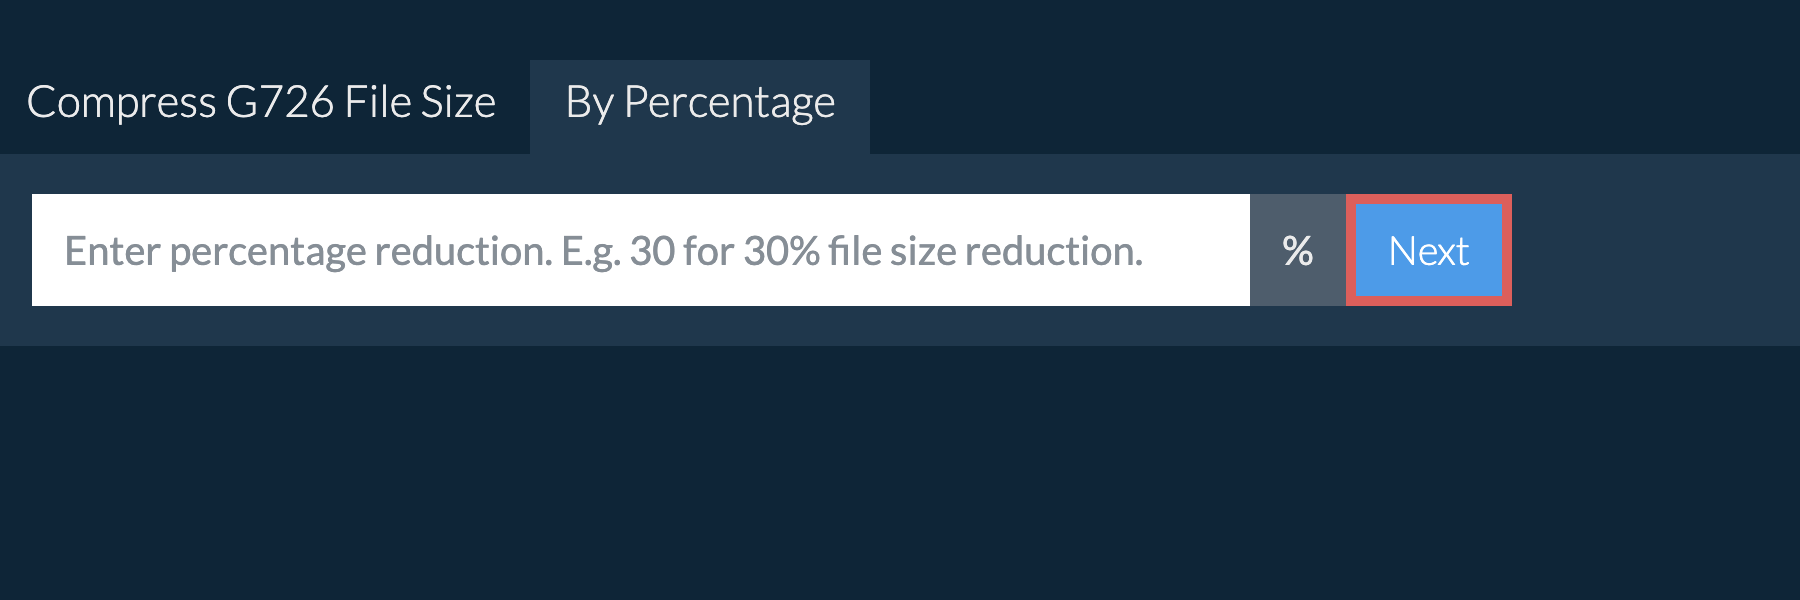 Reduce g726 By Percentage